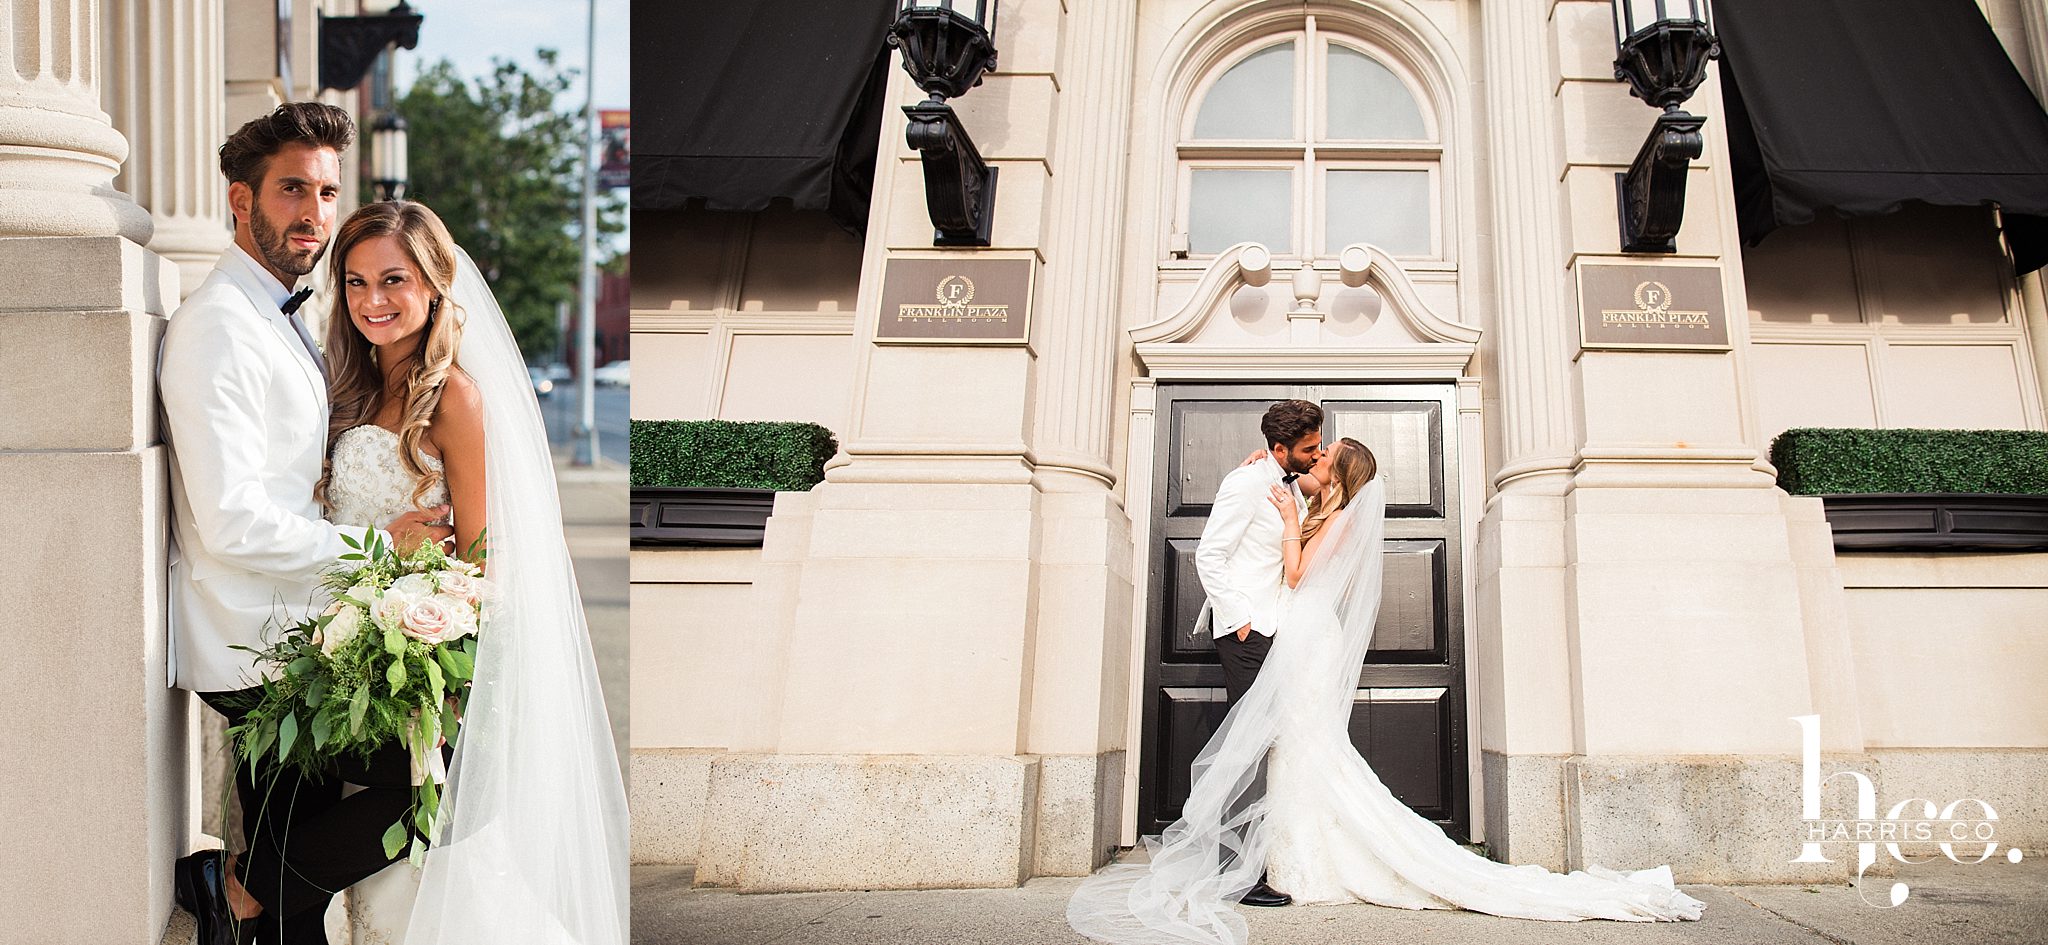 Stef & Marco | Franklin Plaza Wedding | Wedding Photography | The Harris Co | theharrisco.com